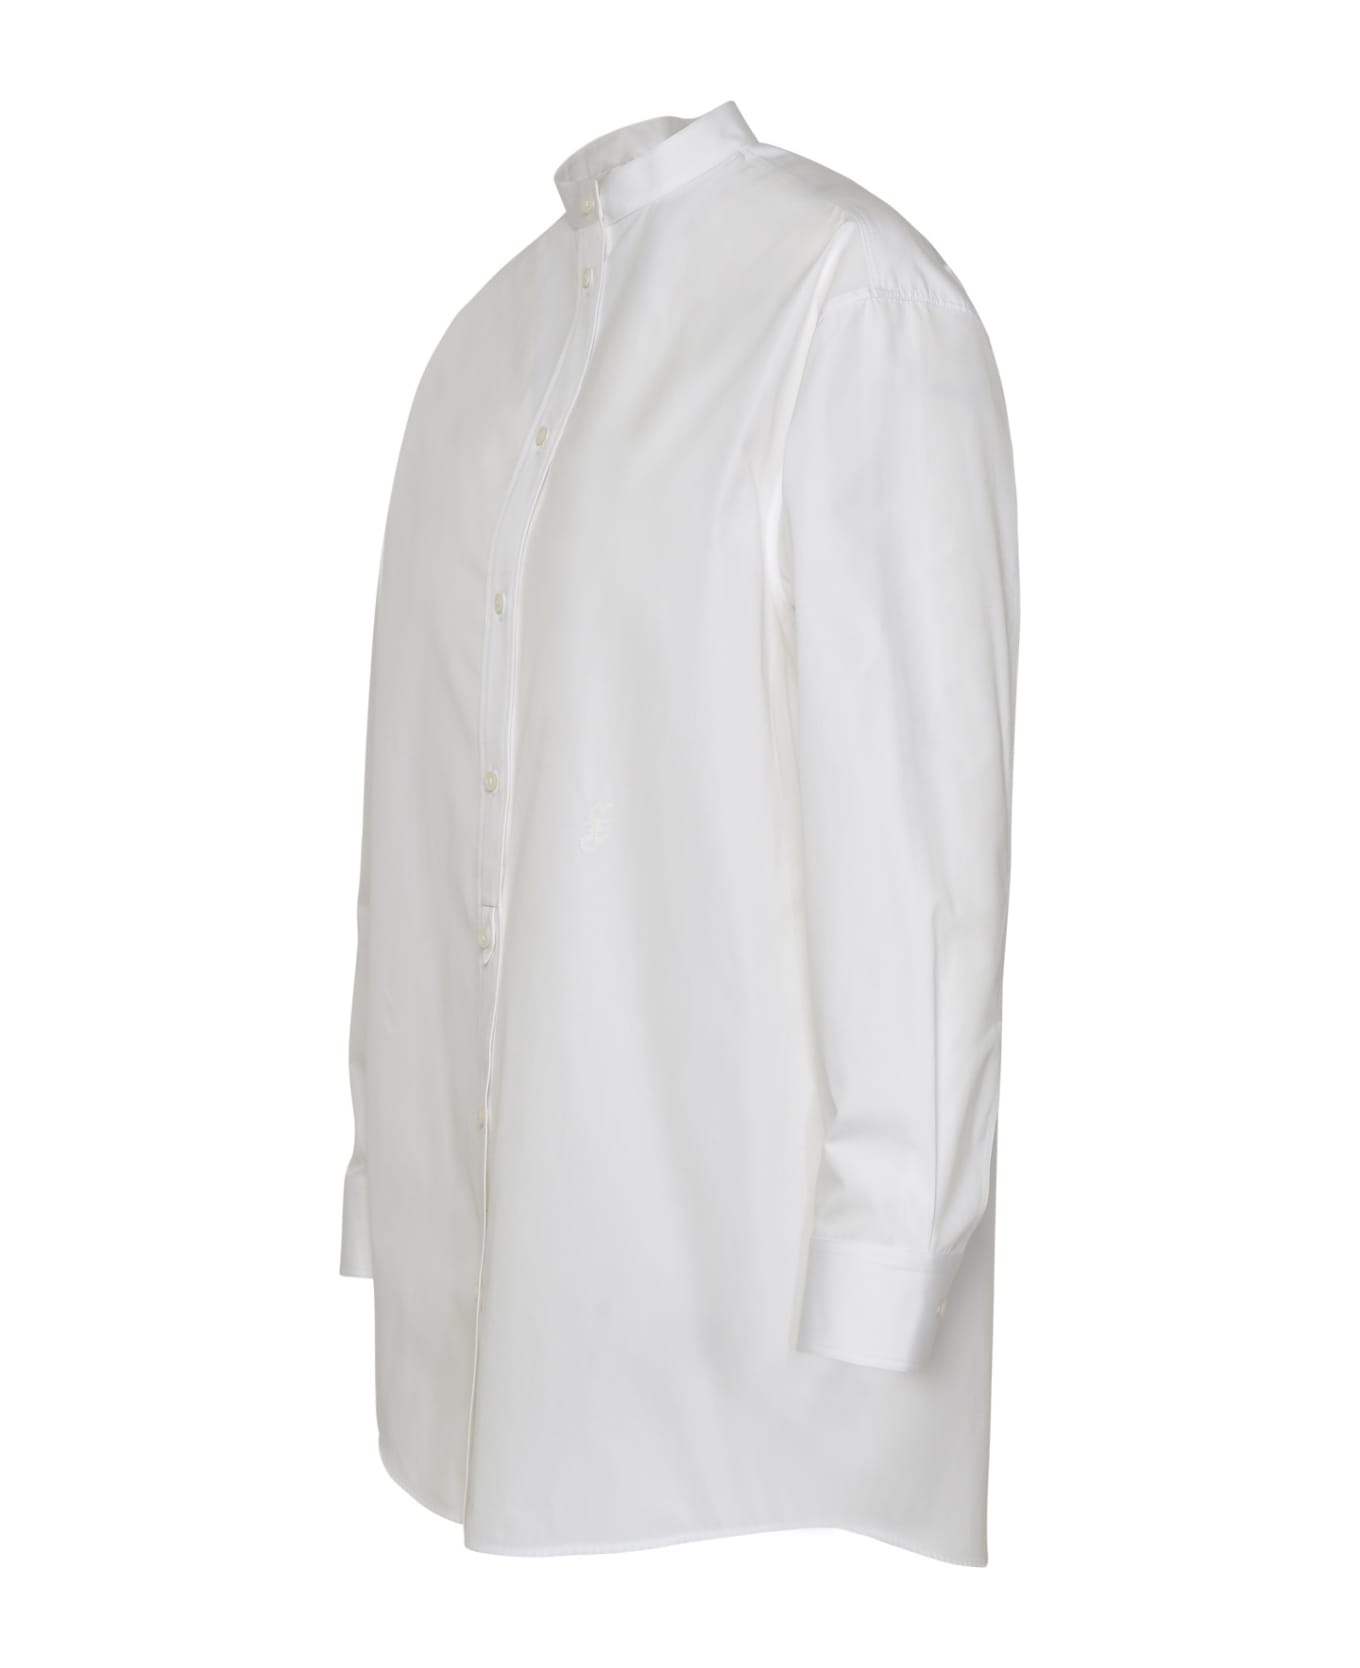 Jil Sander White Cotton Wednesday Shirt